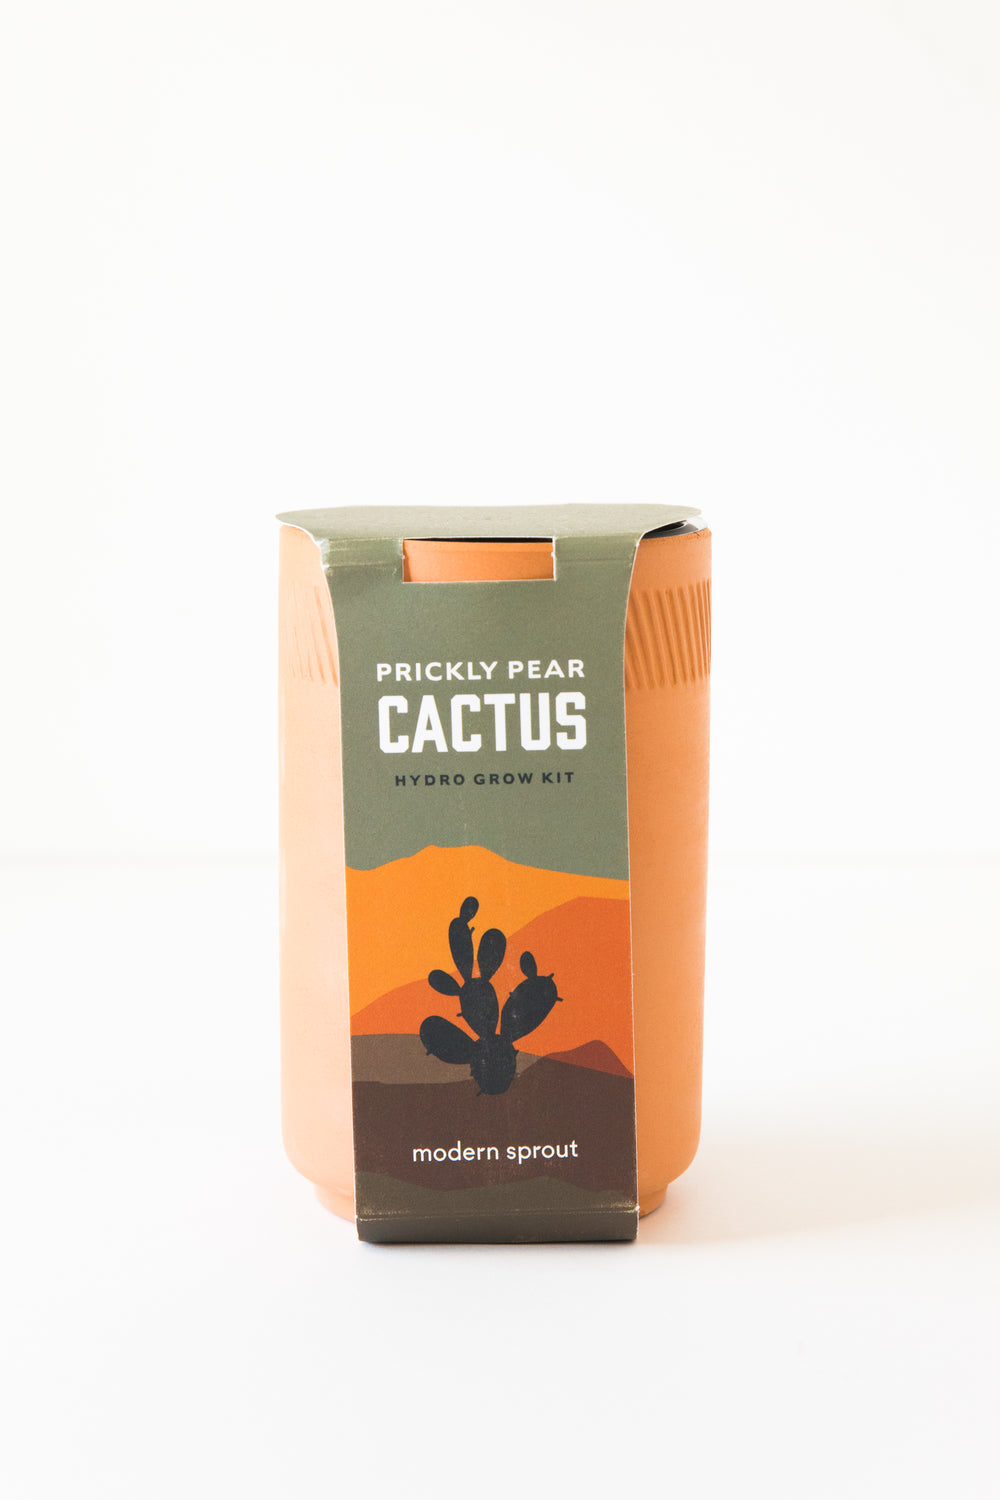 Prickly Pear Cactus Terracotta Kit